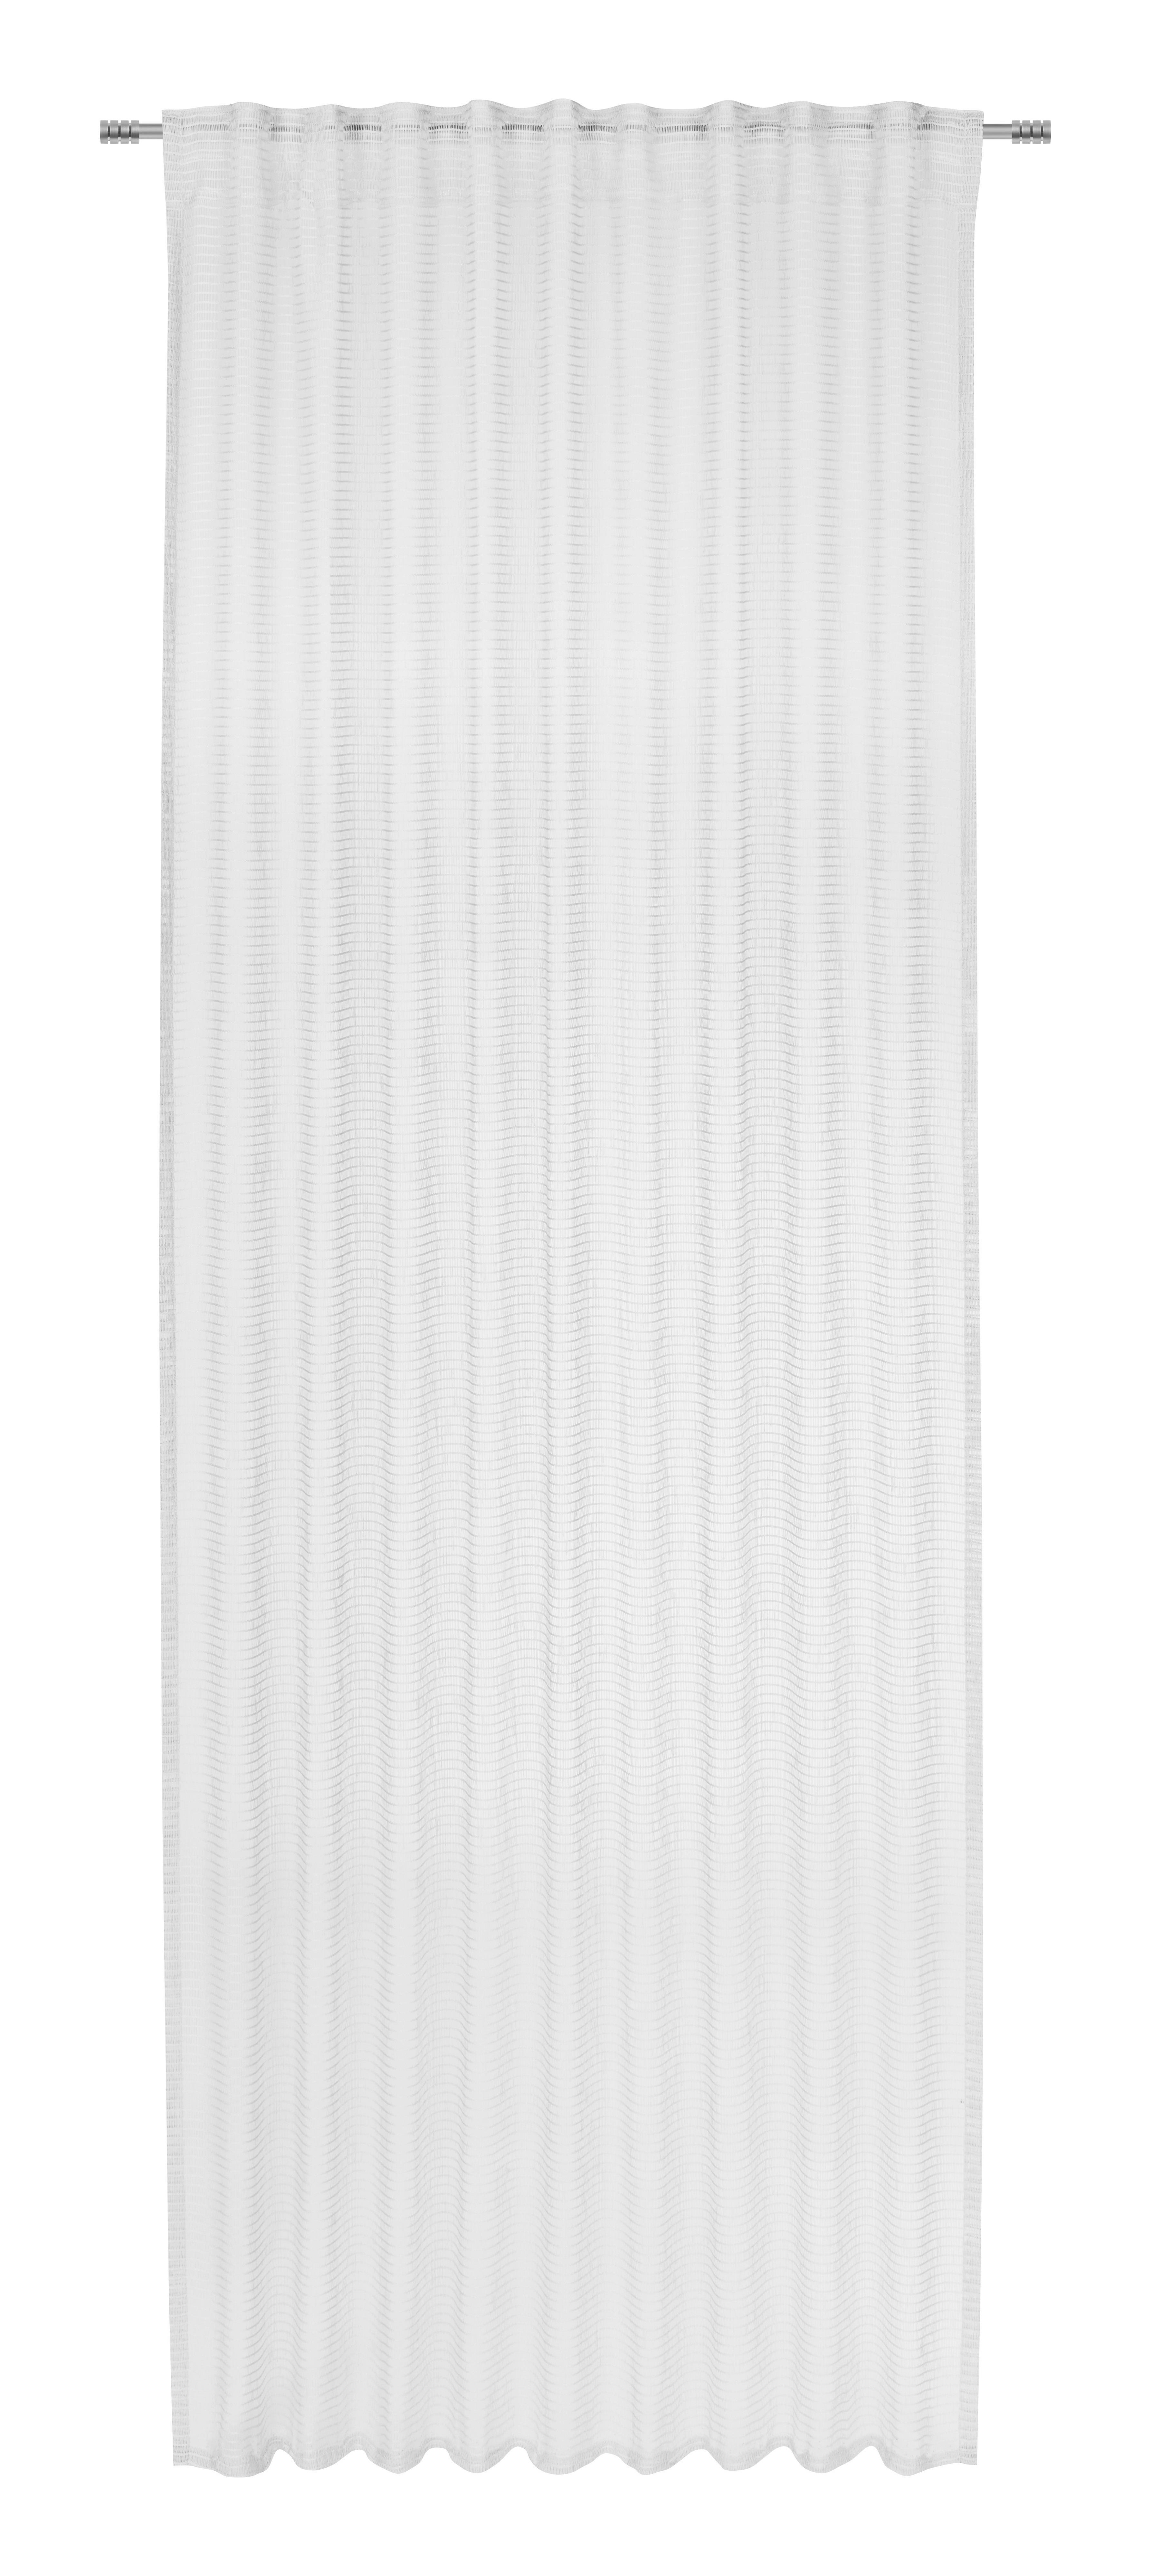 Končana Zavesa Luka - bela, Konvencionalno, tekstil (135/245cm) - Premium Living